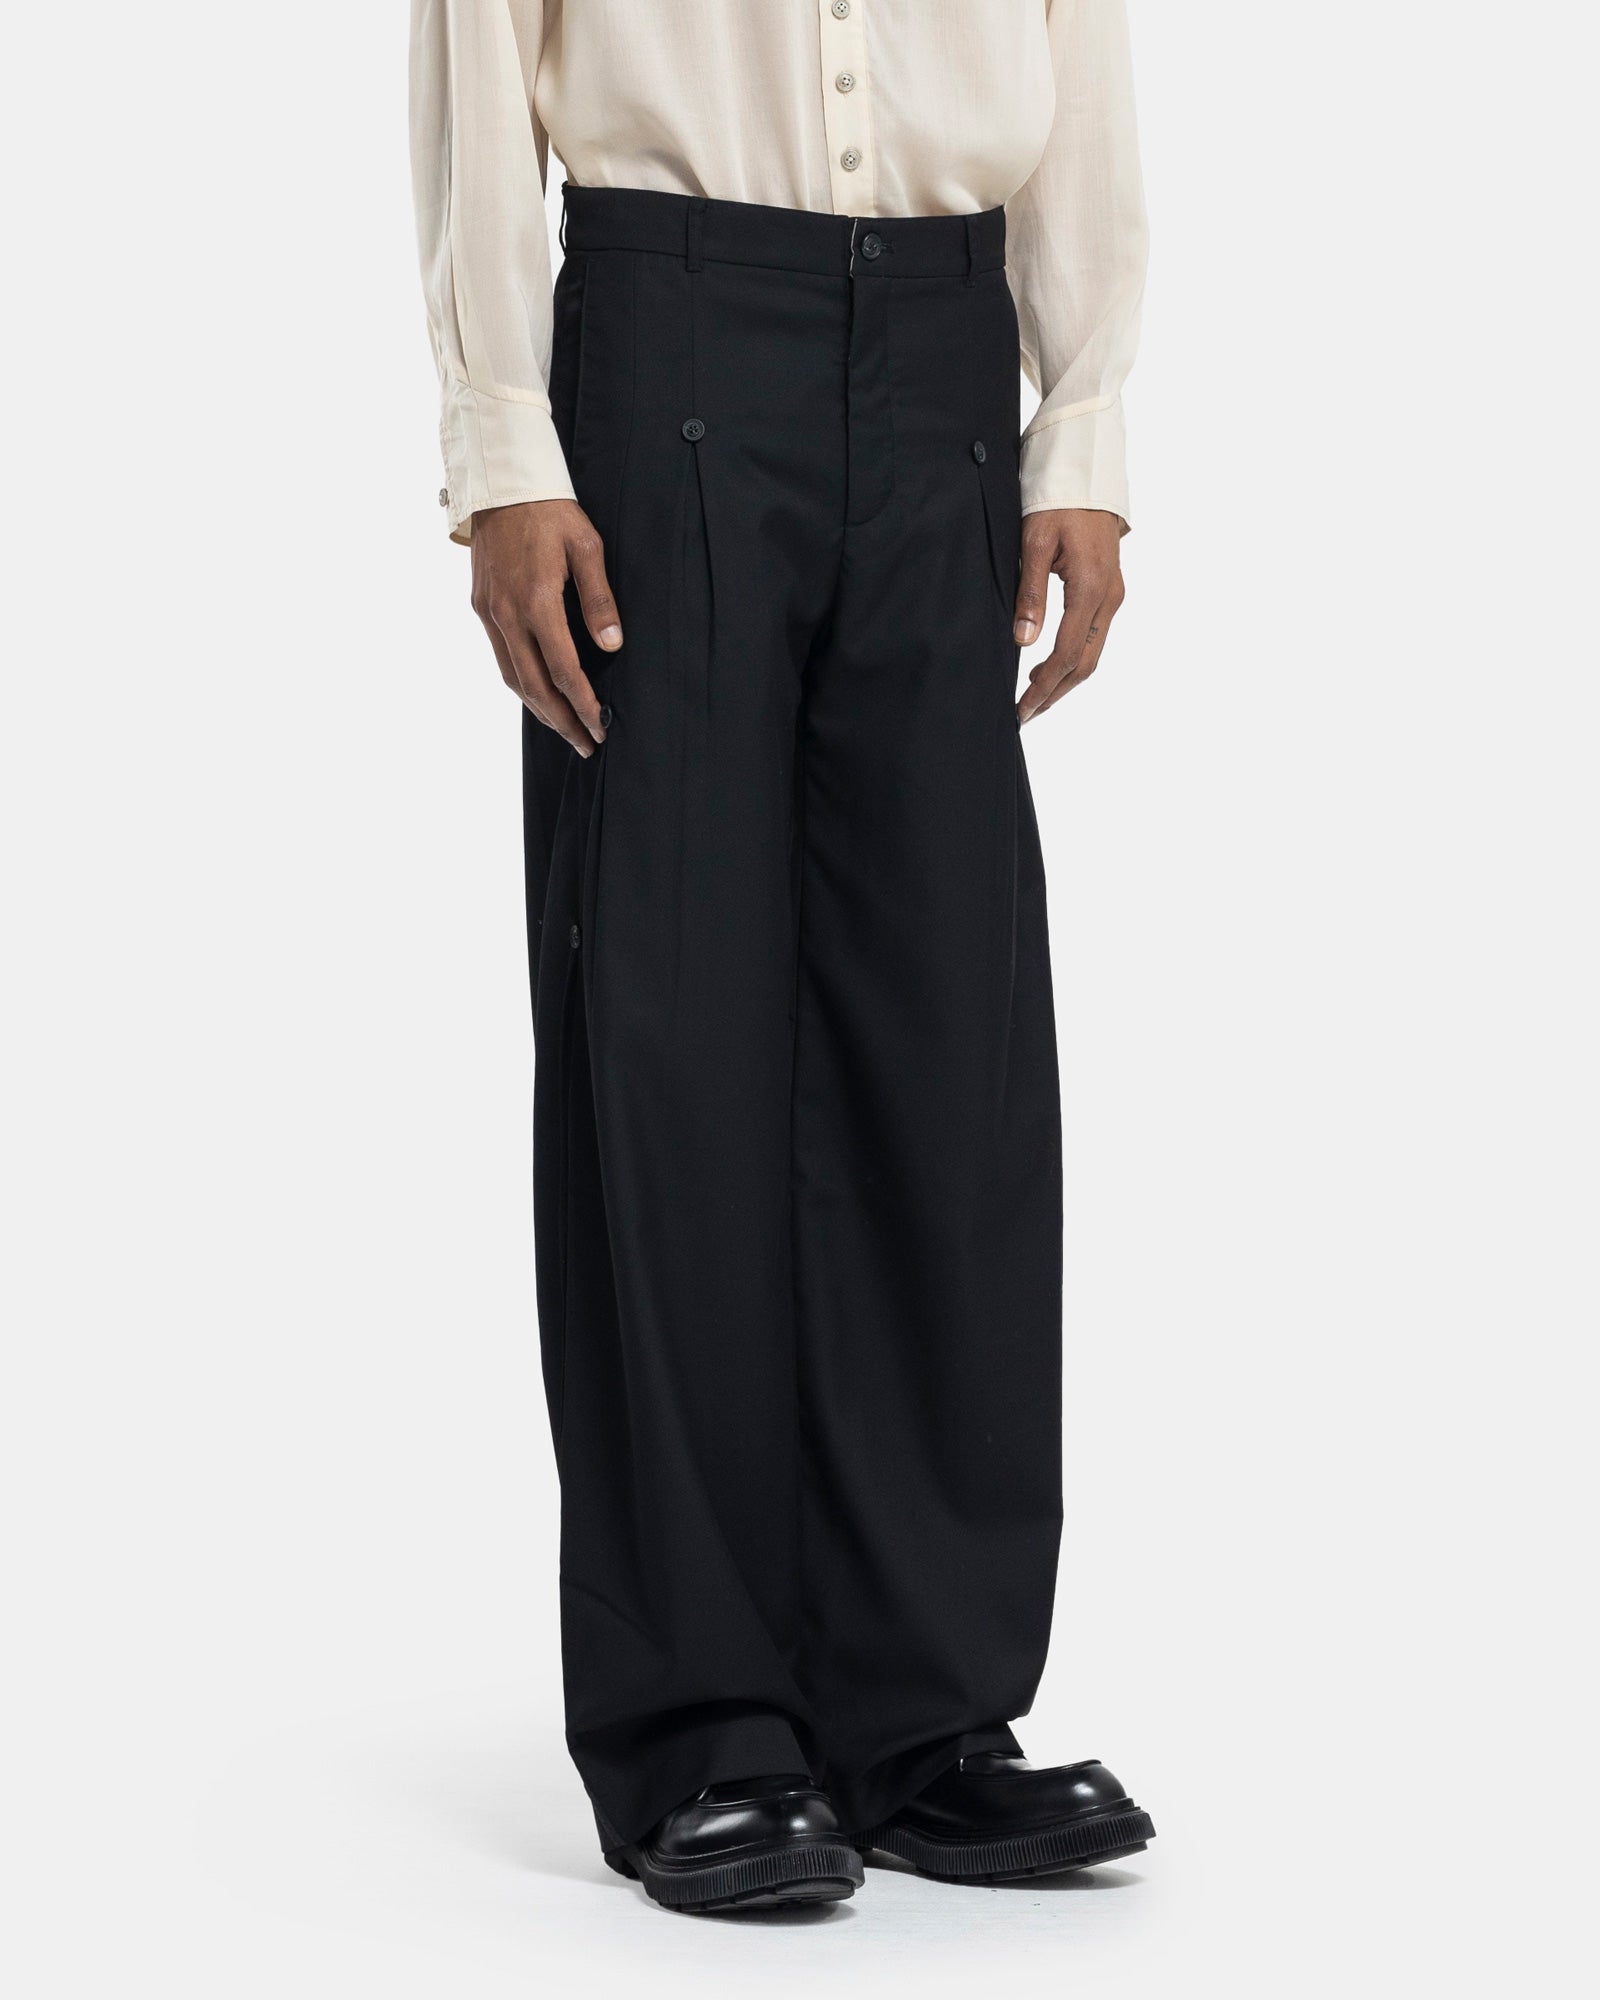 Male model wearing Professor.E black trousers on white background